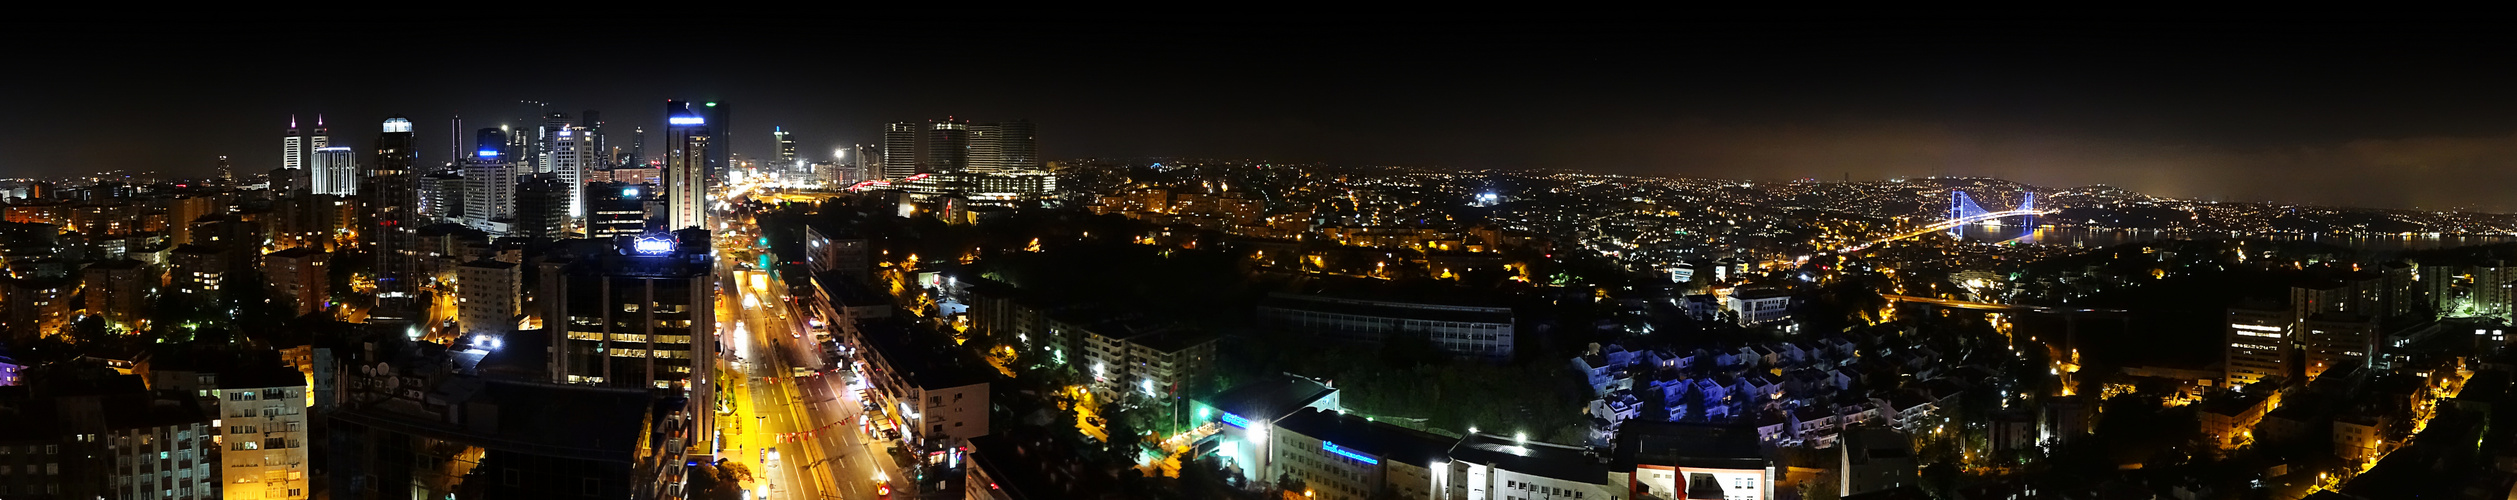 Istanbul @ night...